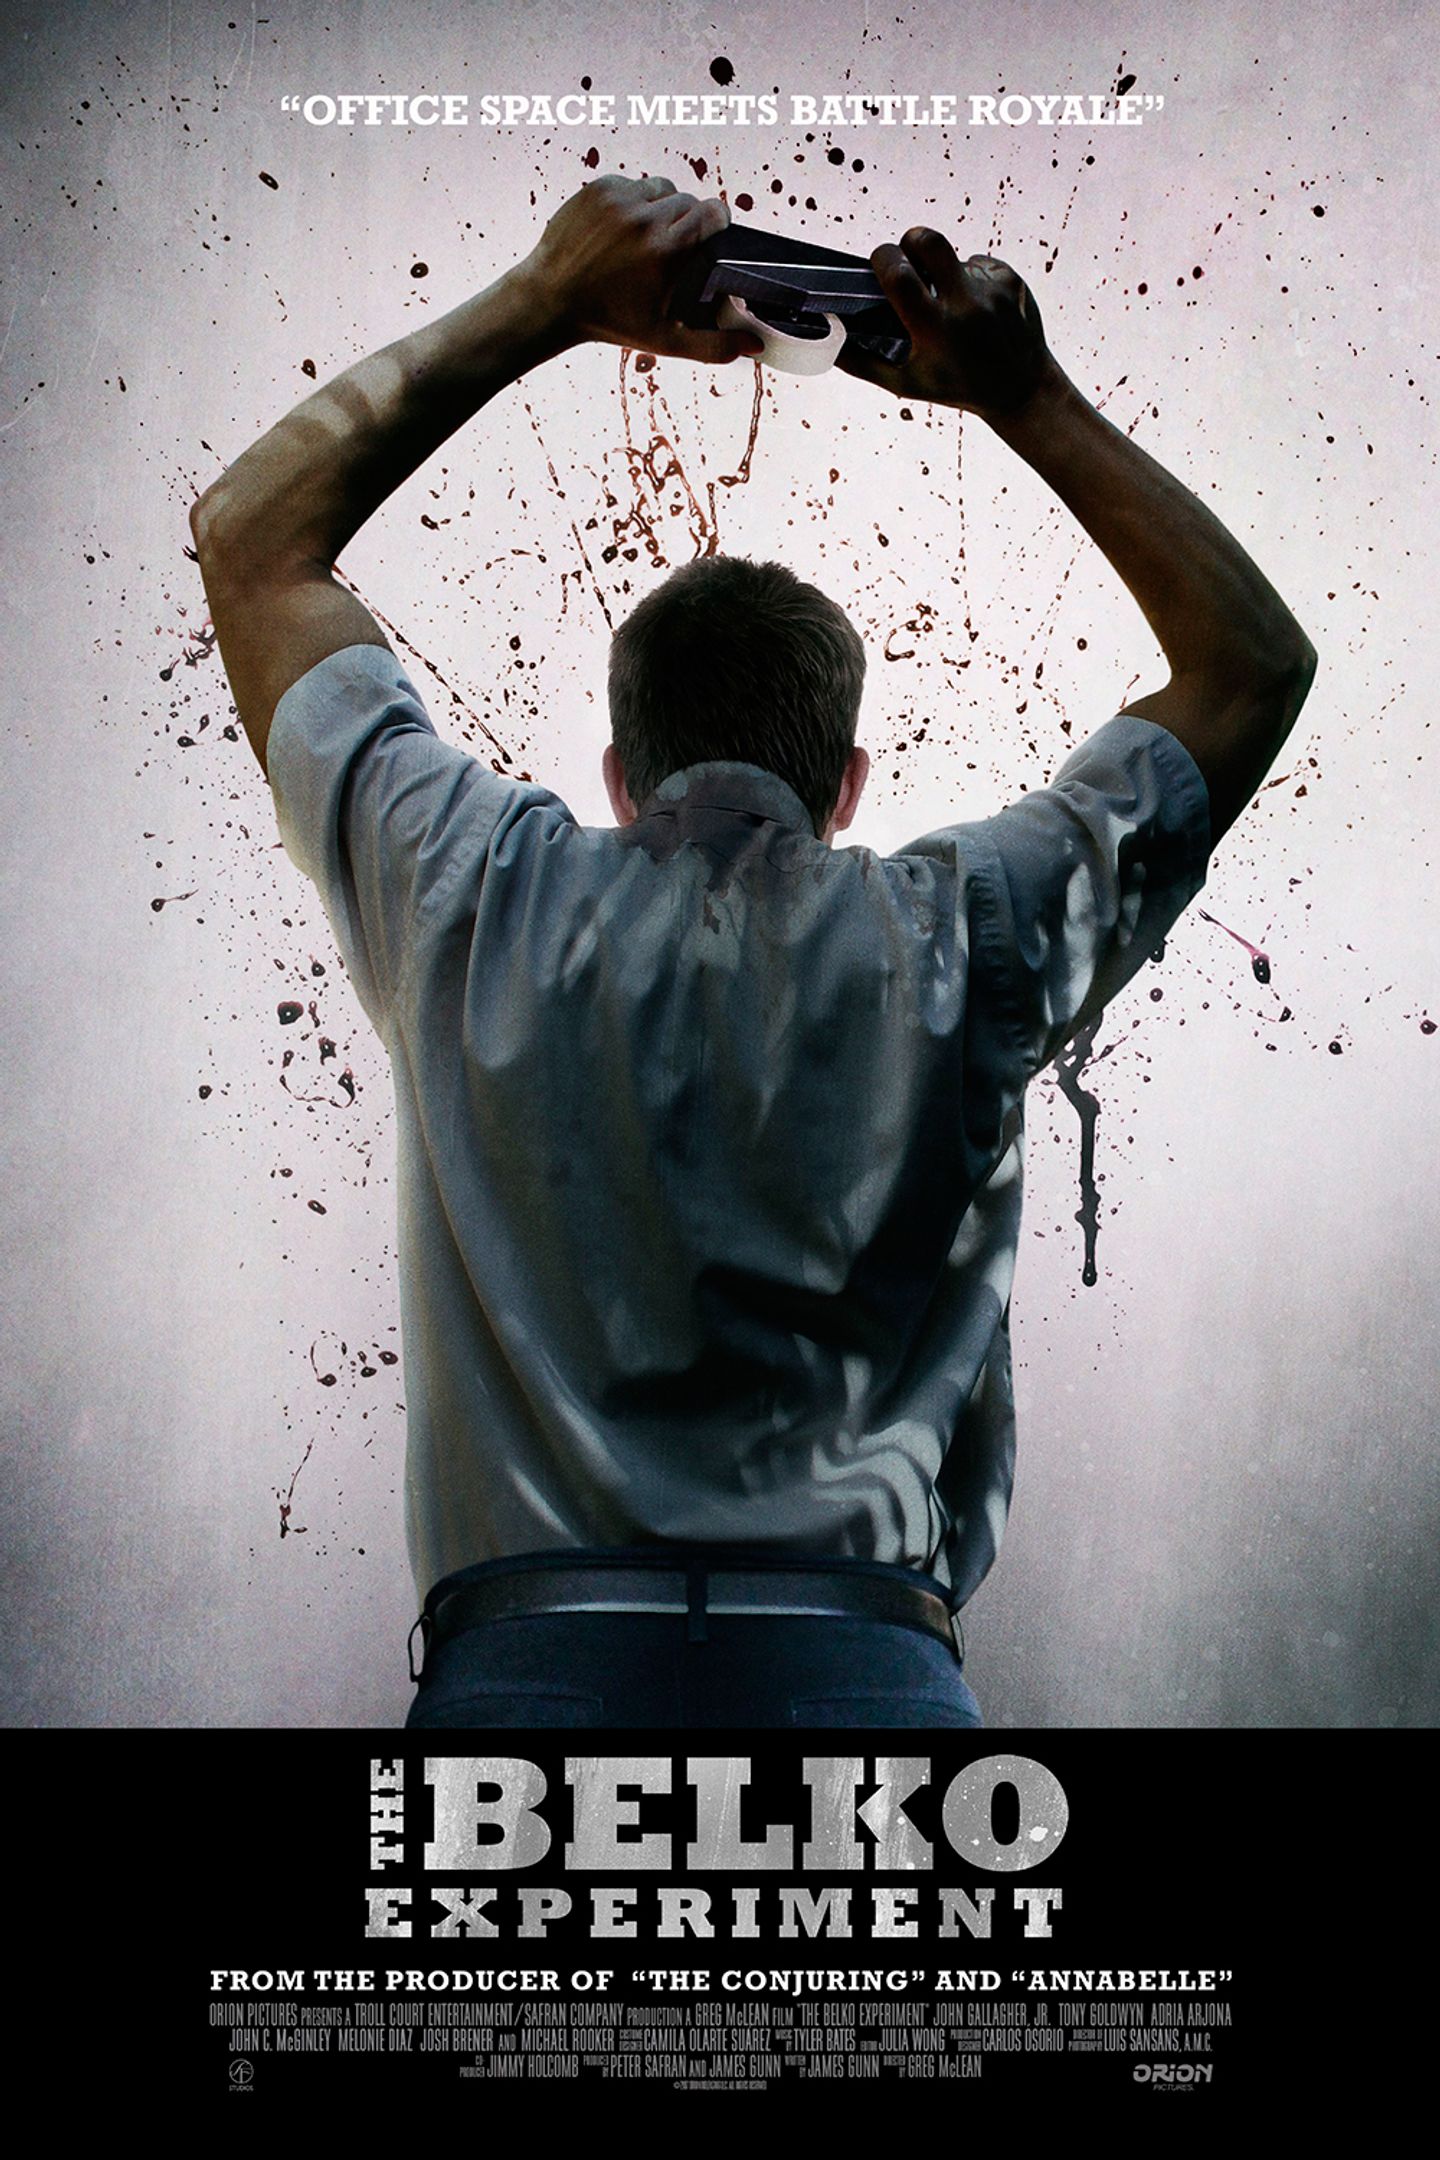 Plakat for 'The Belko Experiment'